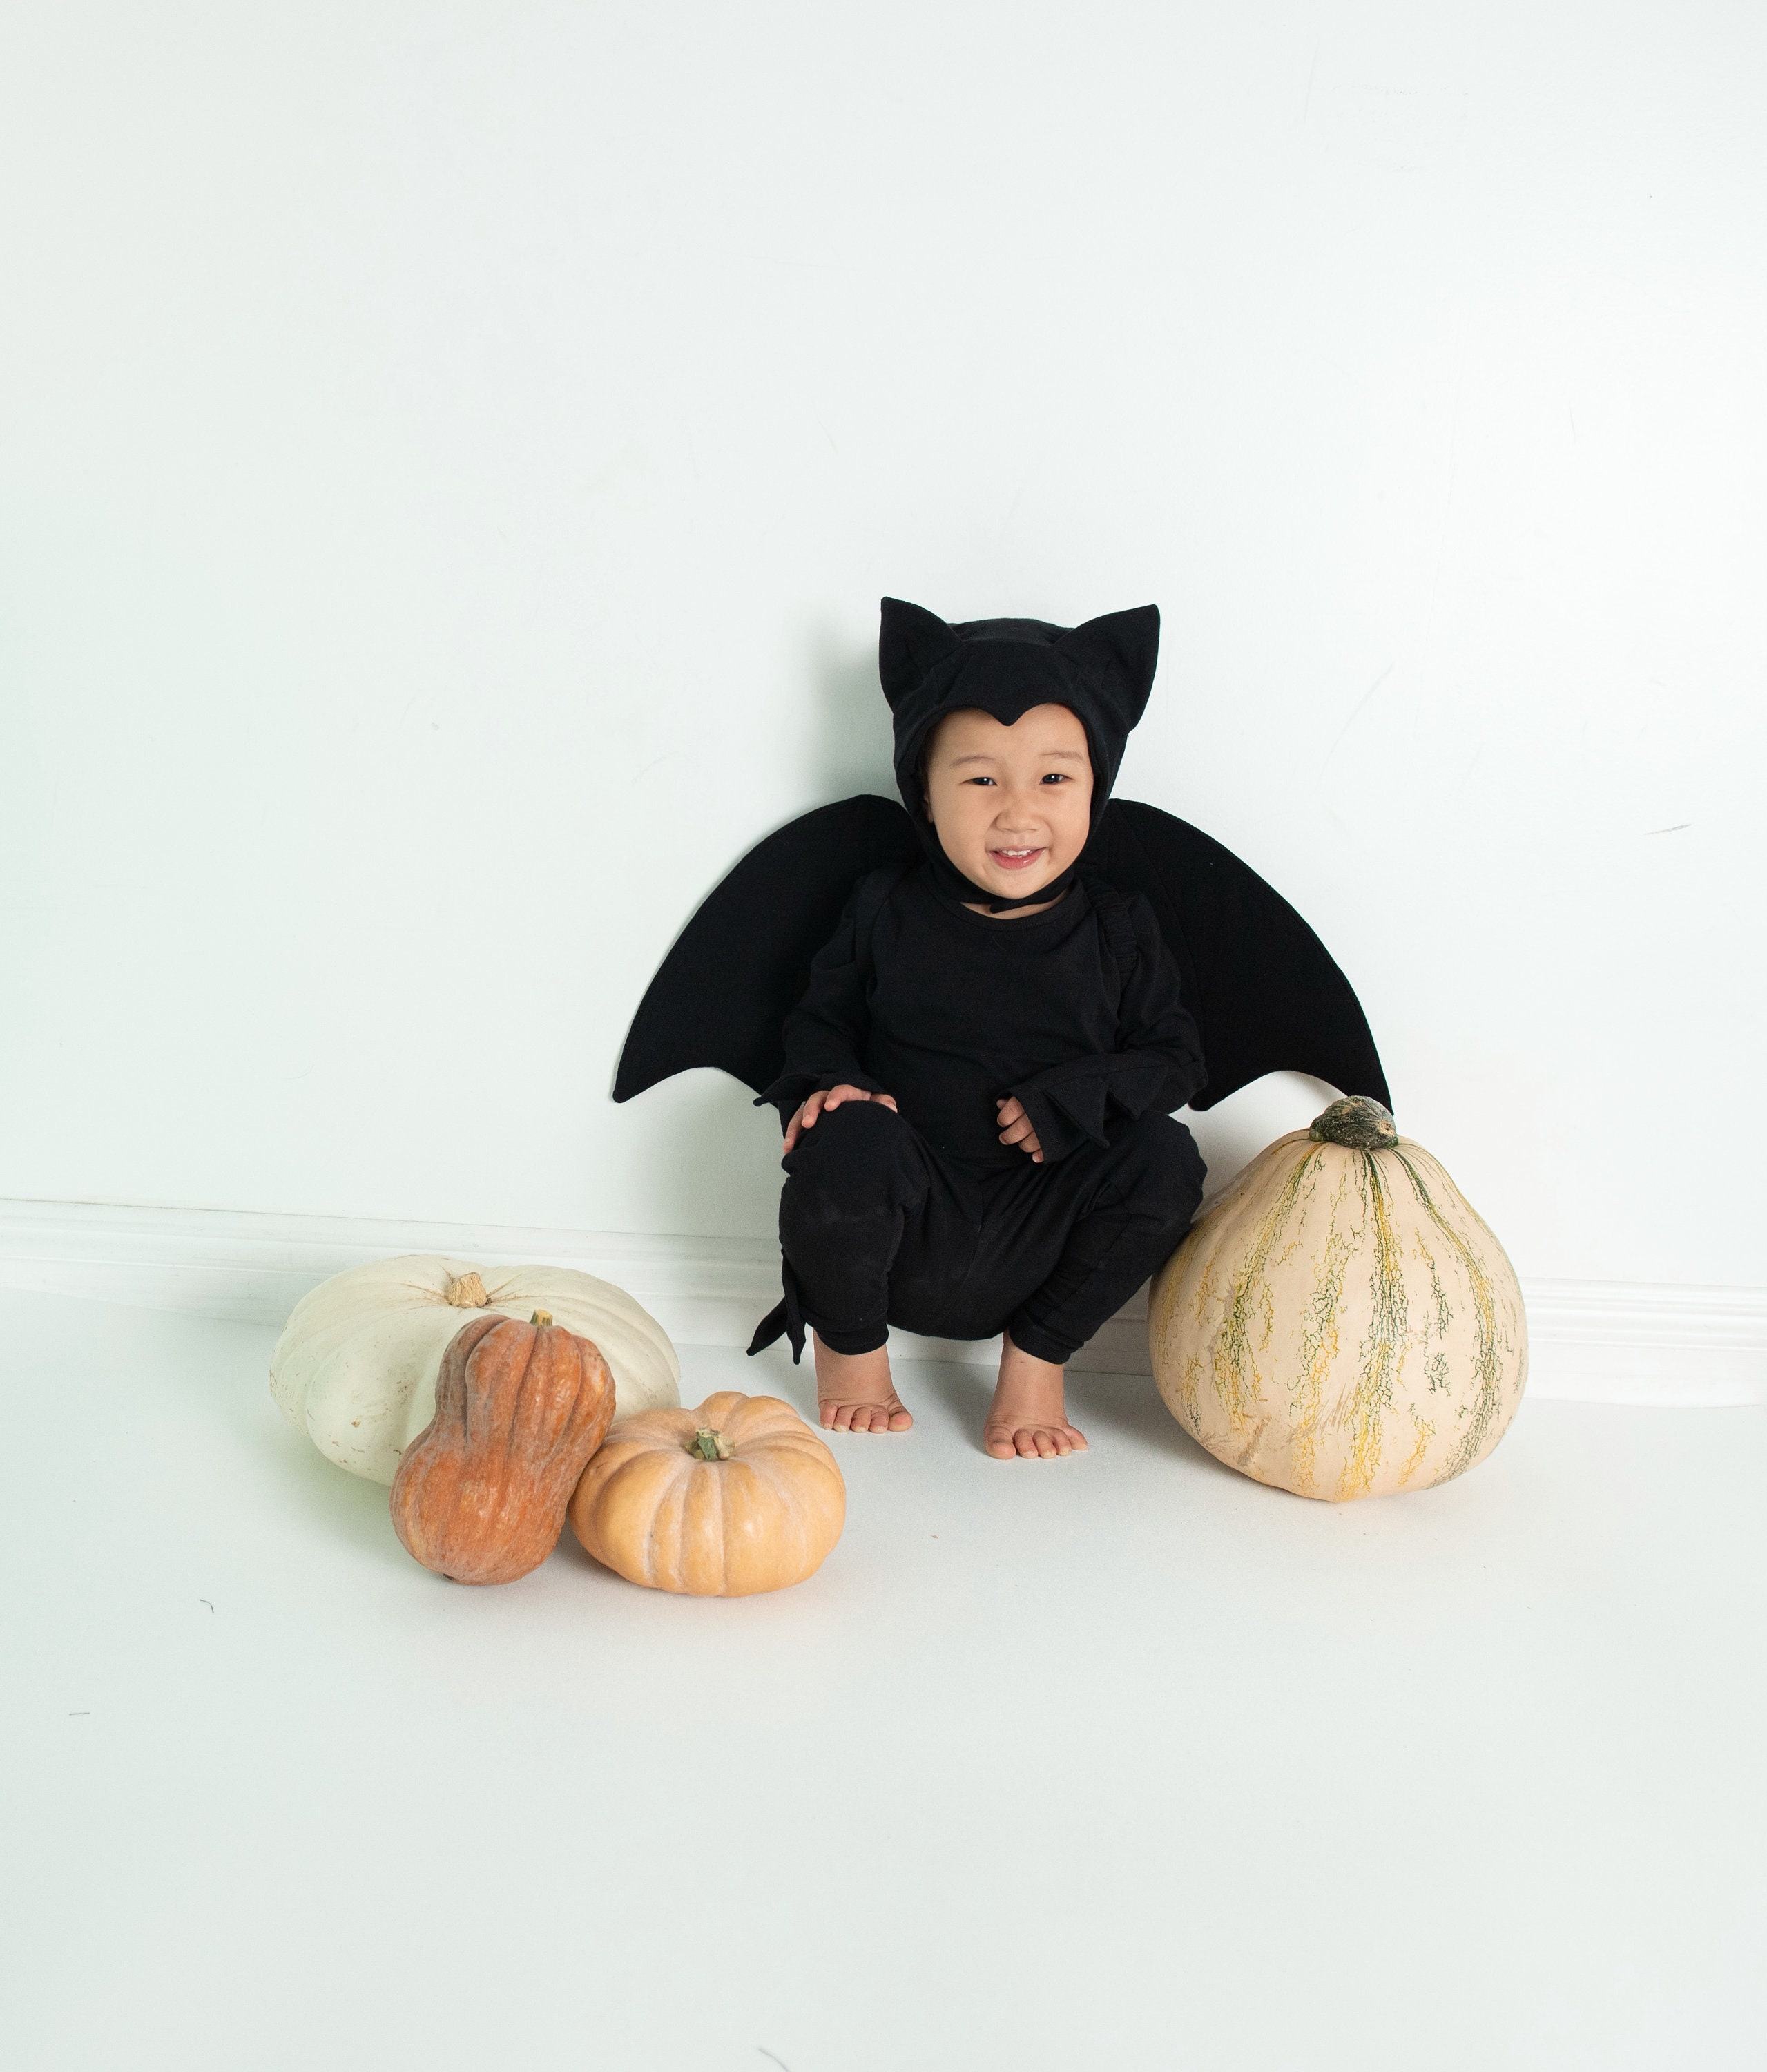  Qvkarw Disfraz de murciélago para bebé, disfraz de